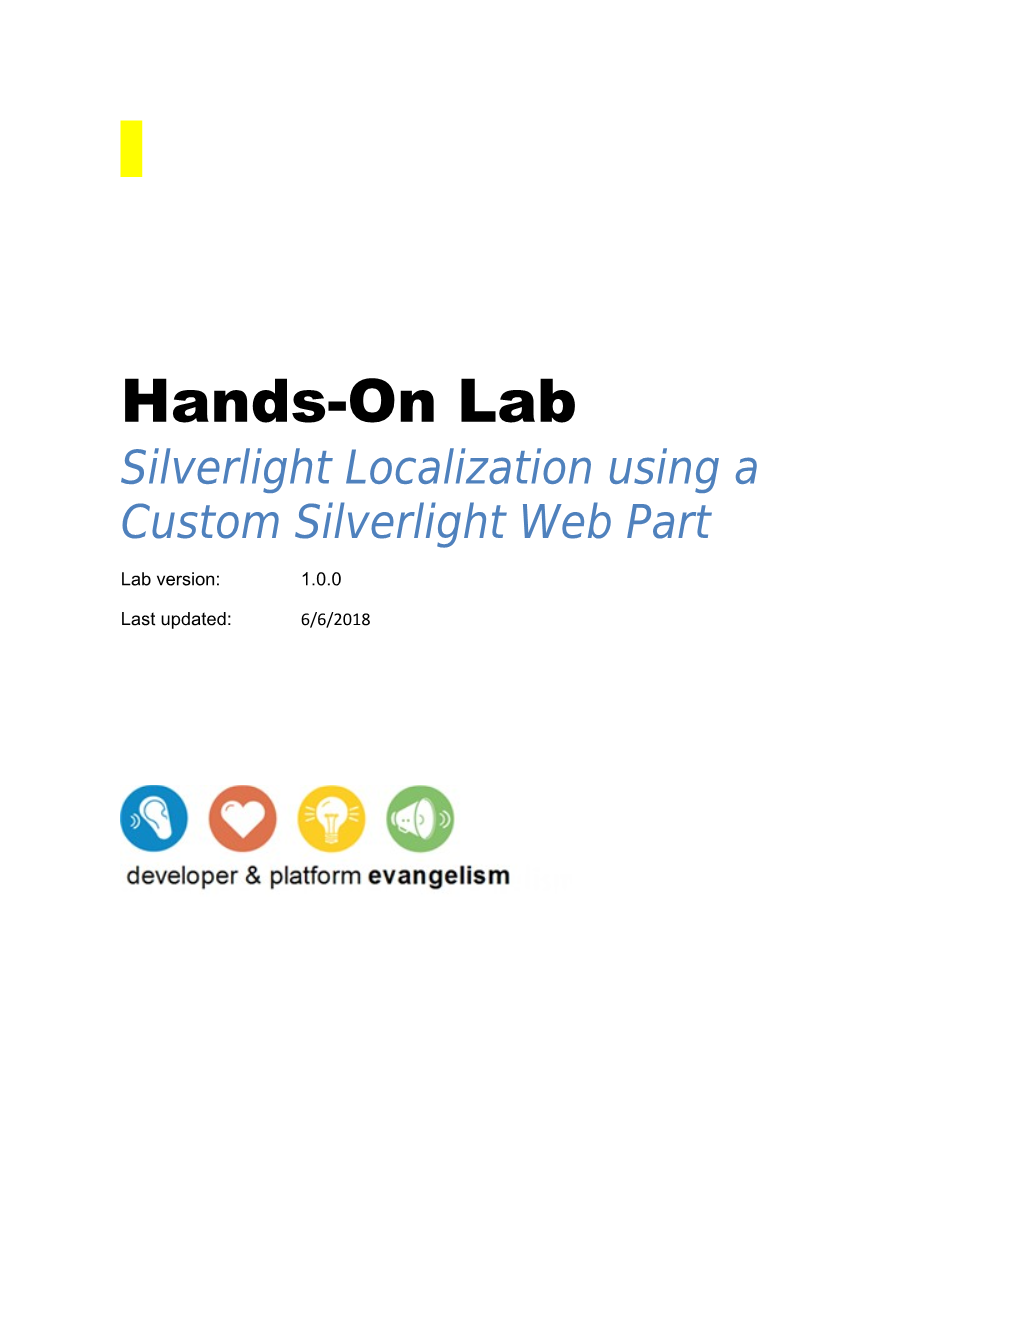 Silverlight Localization Using a Custom Silverlight Web Part